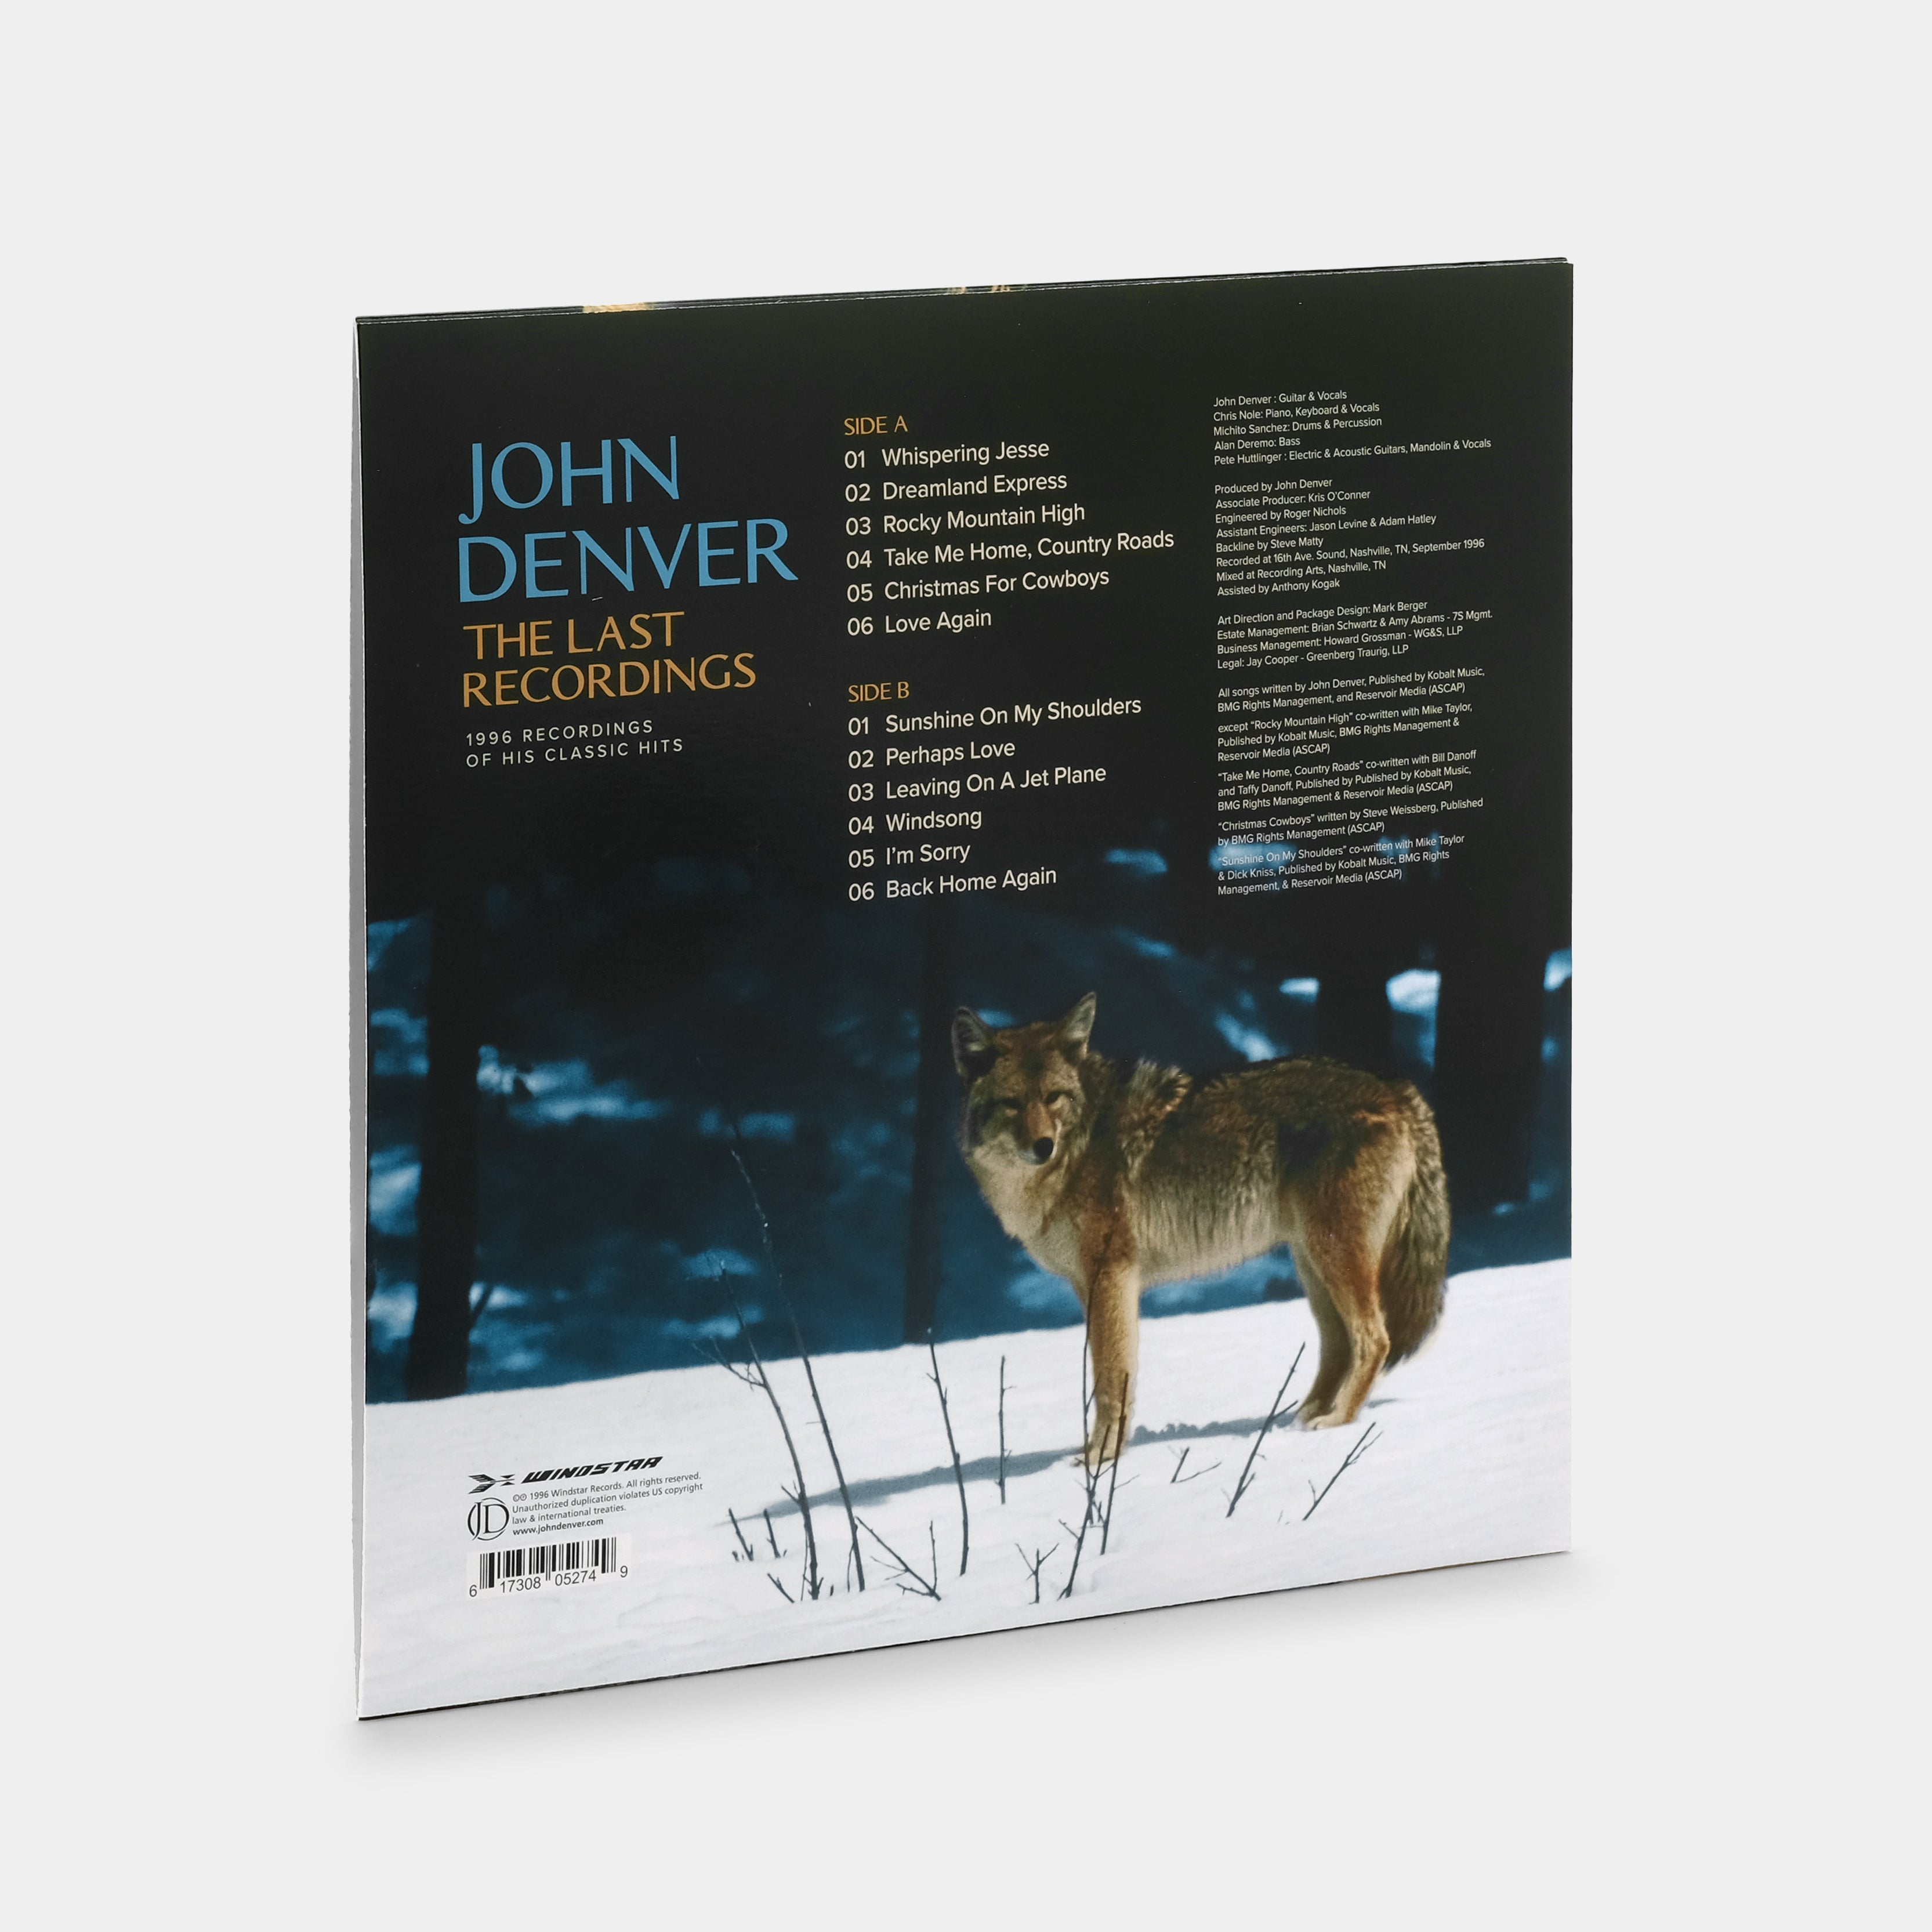 John Denver - The Last Recordings LP Blue Seafoam Wave Vinyl Record